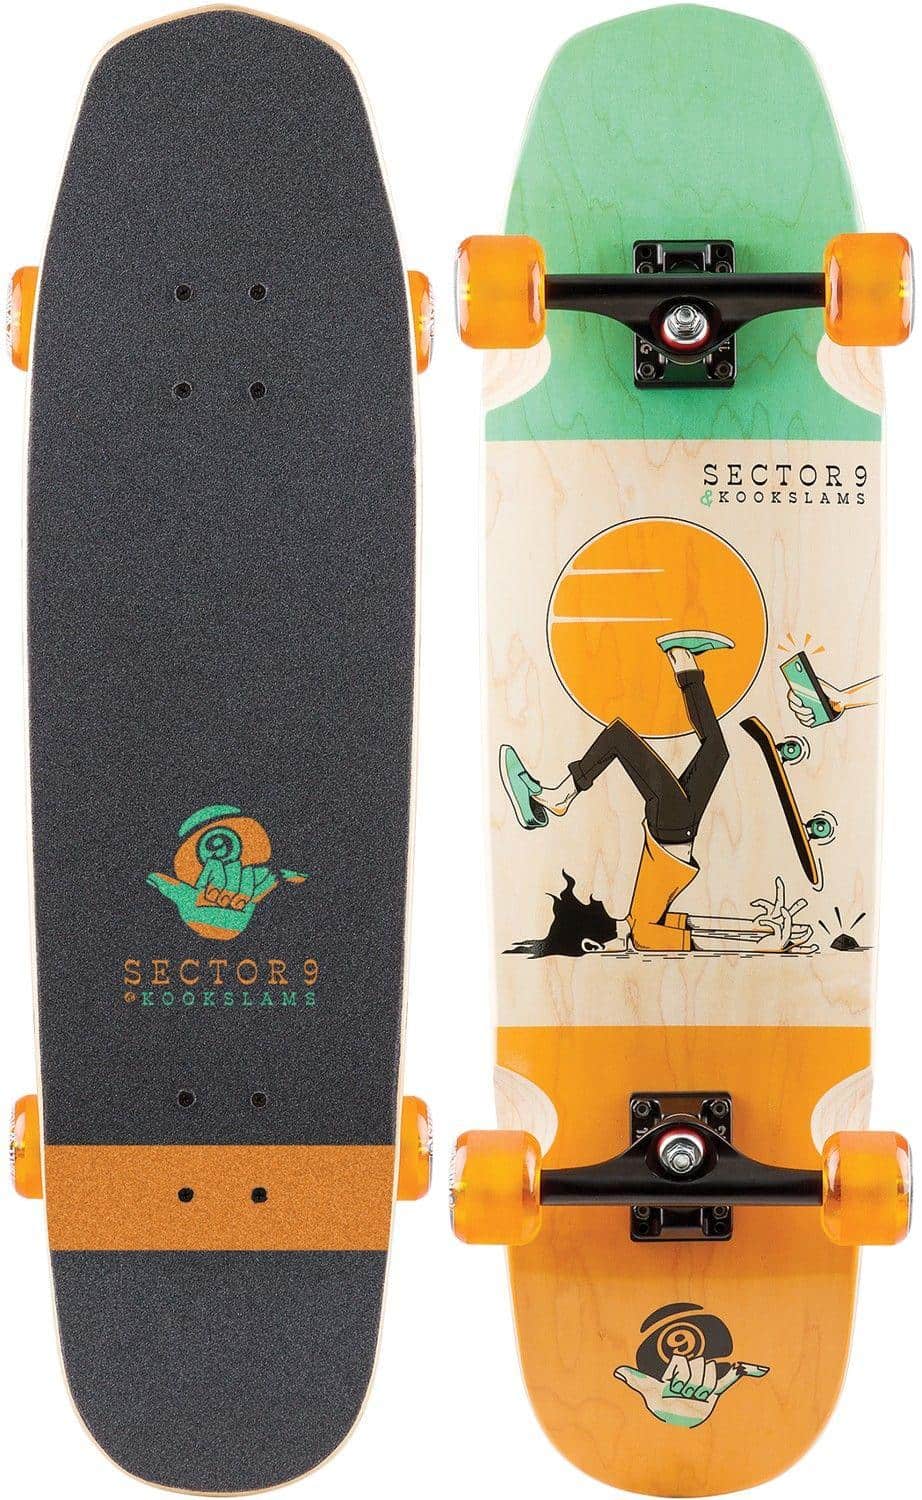 Sector 9 kookslams skateboards design